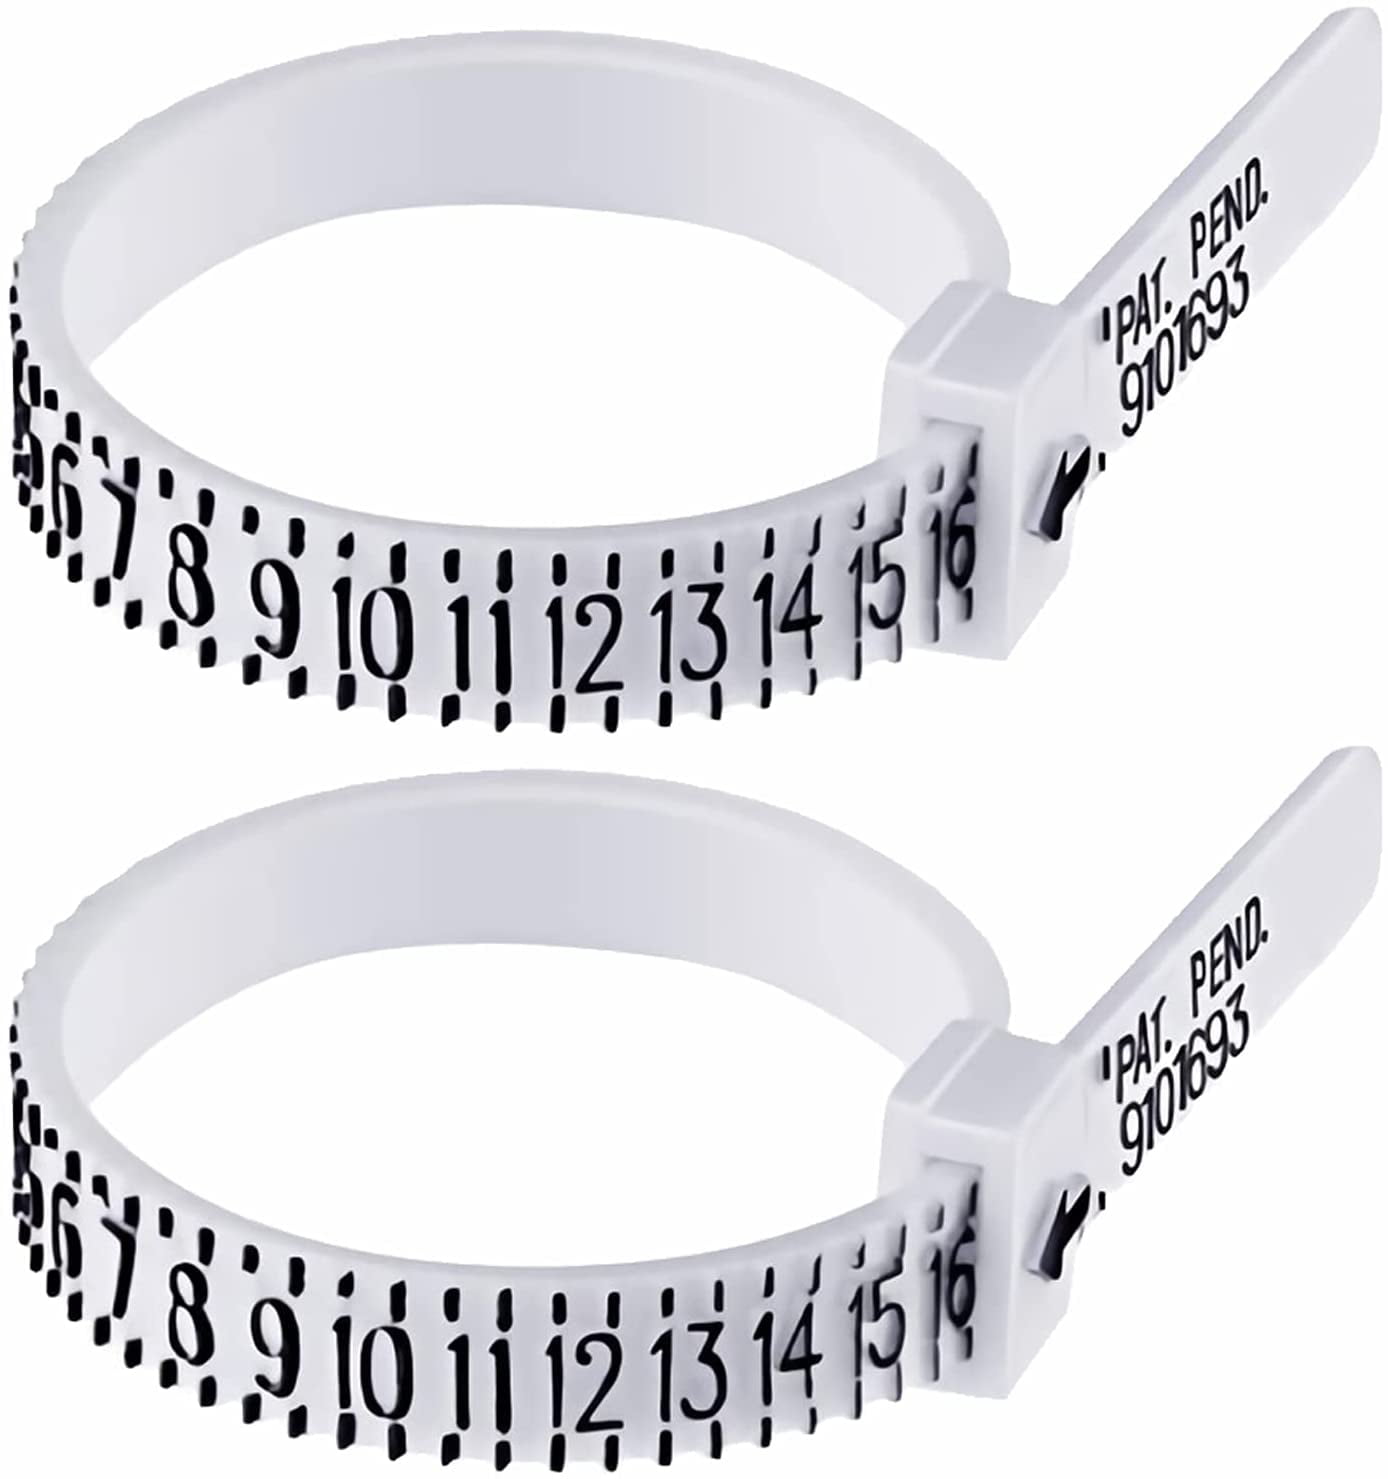 SEYHR Ring Sizer Measuring Belt US Size 1-17 Black Ring Sizing Tool,  Reusable Finger Sizer Belt - Adjustable Ring Sizer Belt - Ideal for Home  and